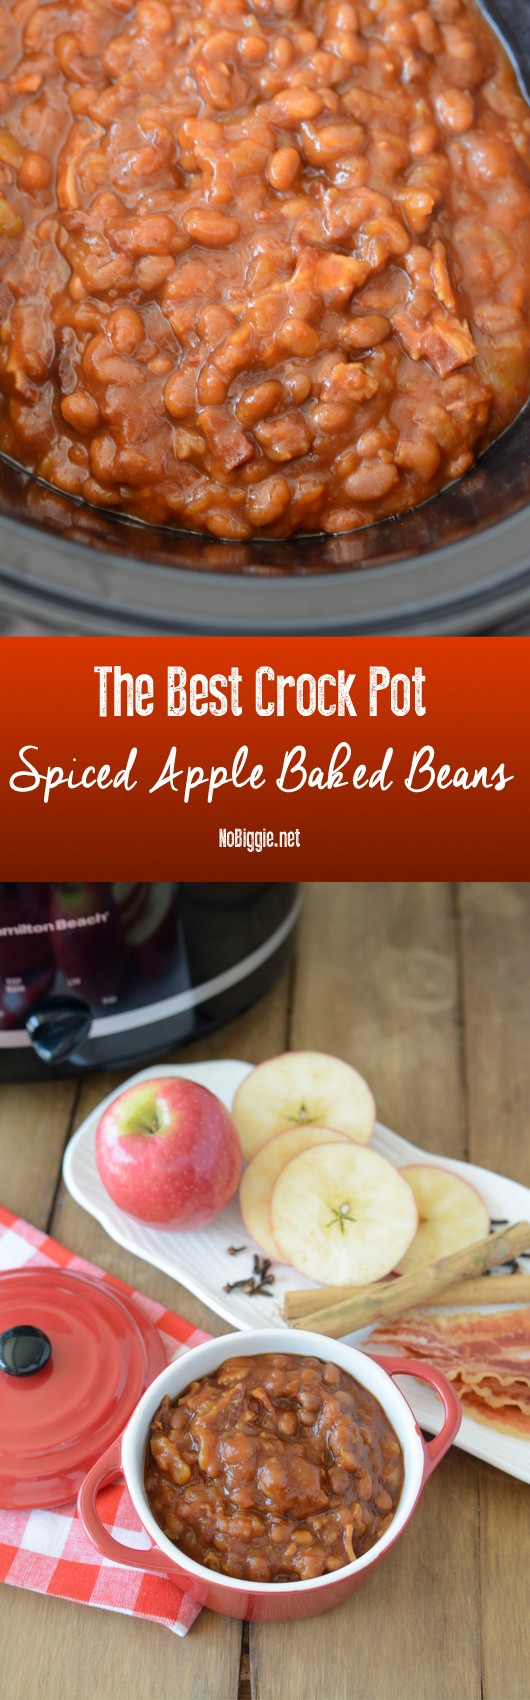 the best crock pot spiced apple baked beans | NoBiggie.net